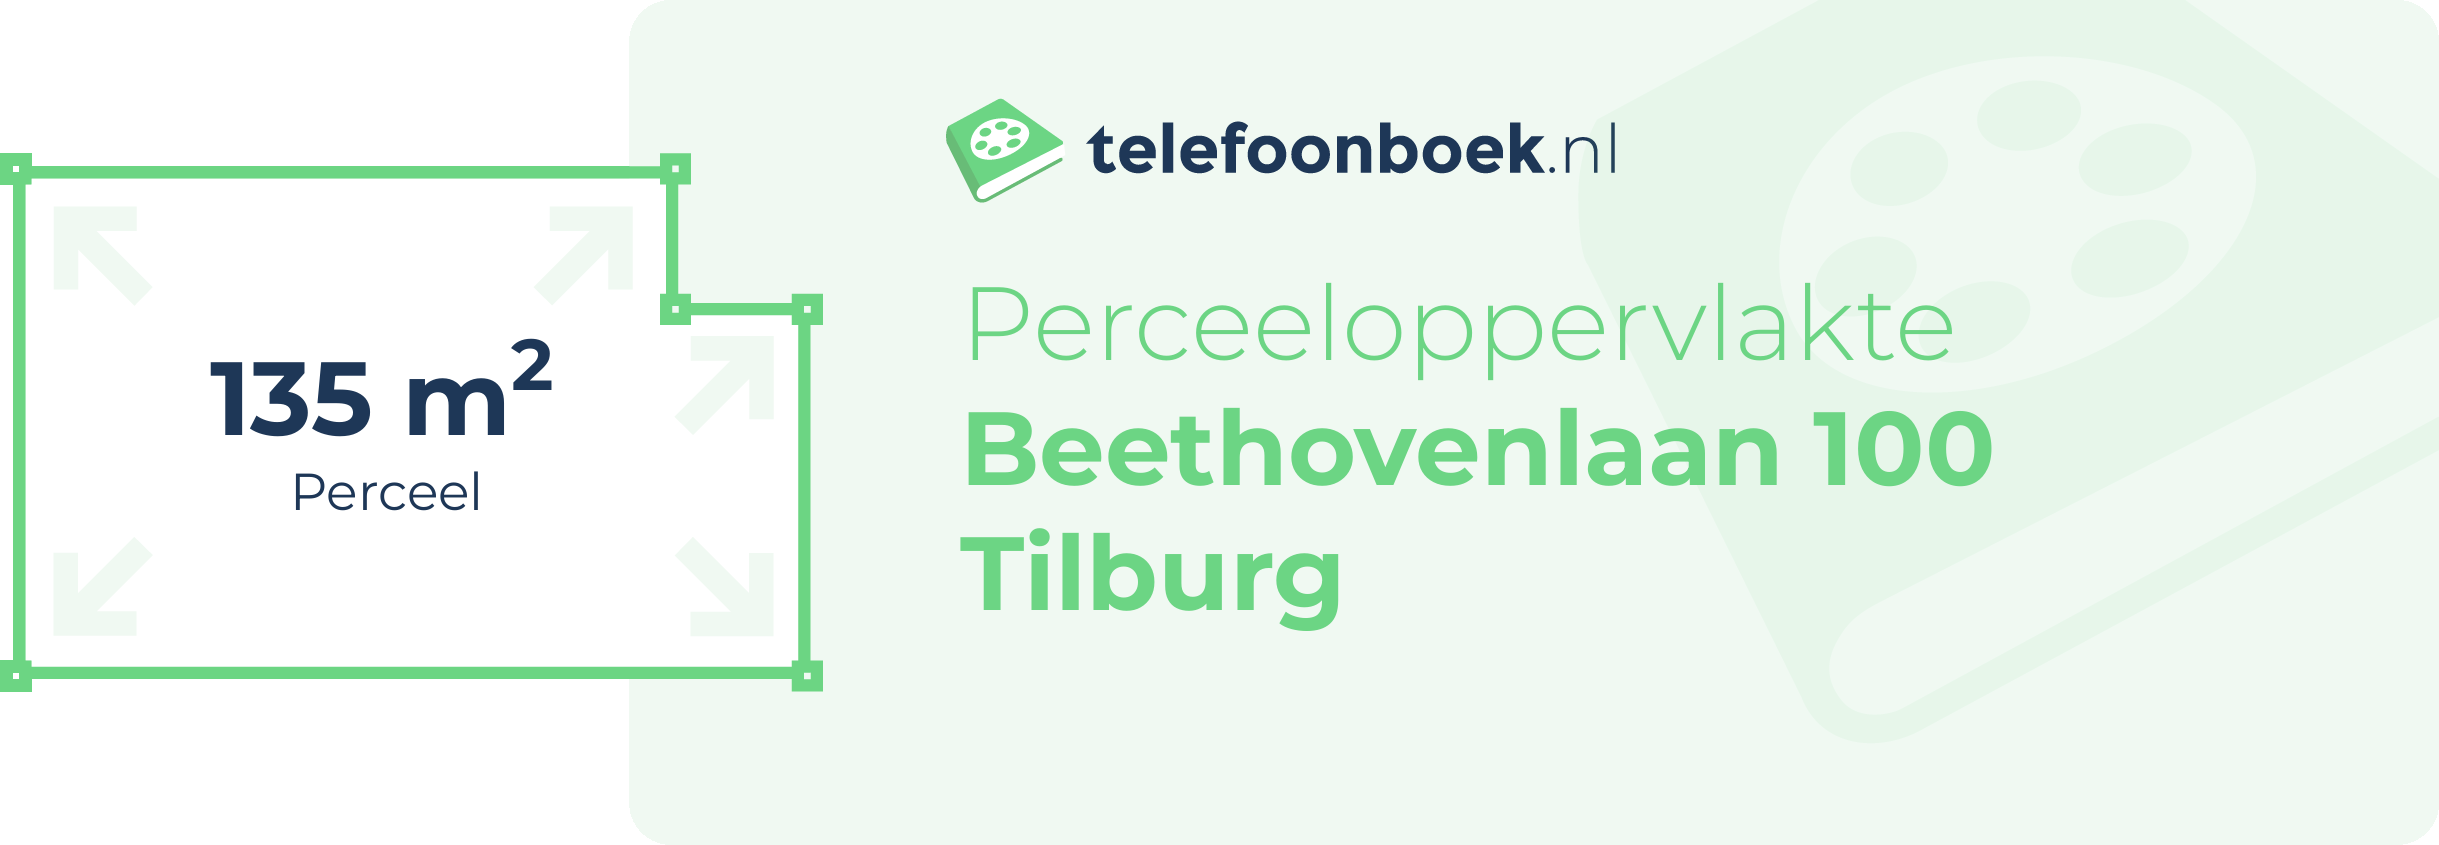 Perceeloppervlakte Beethovenlaan 100 Tilburg